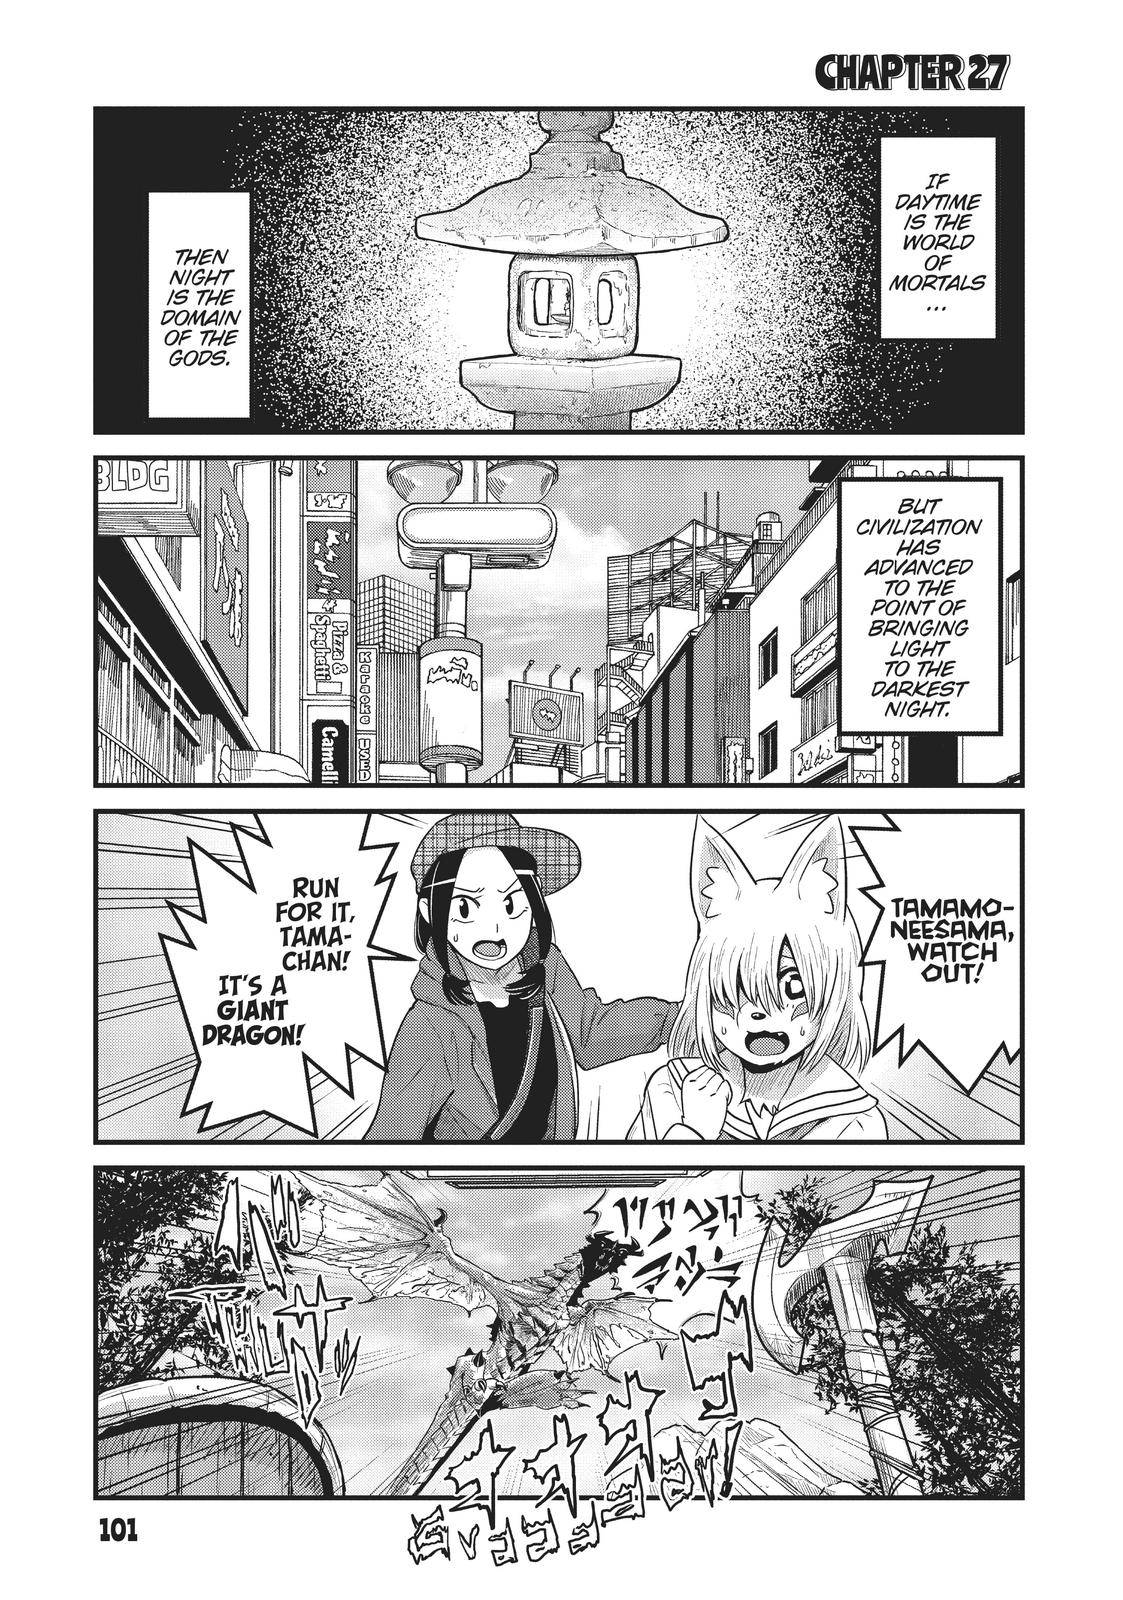 Tamamo-chan's a Fox! - chapter 27 - #1